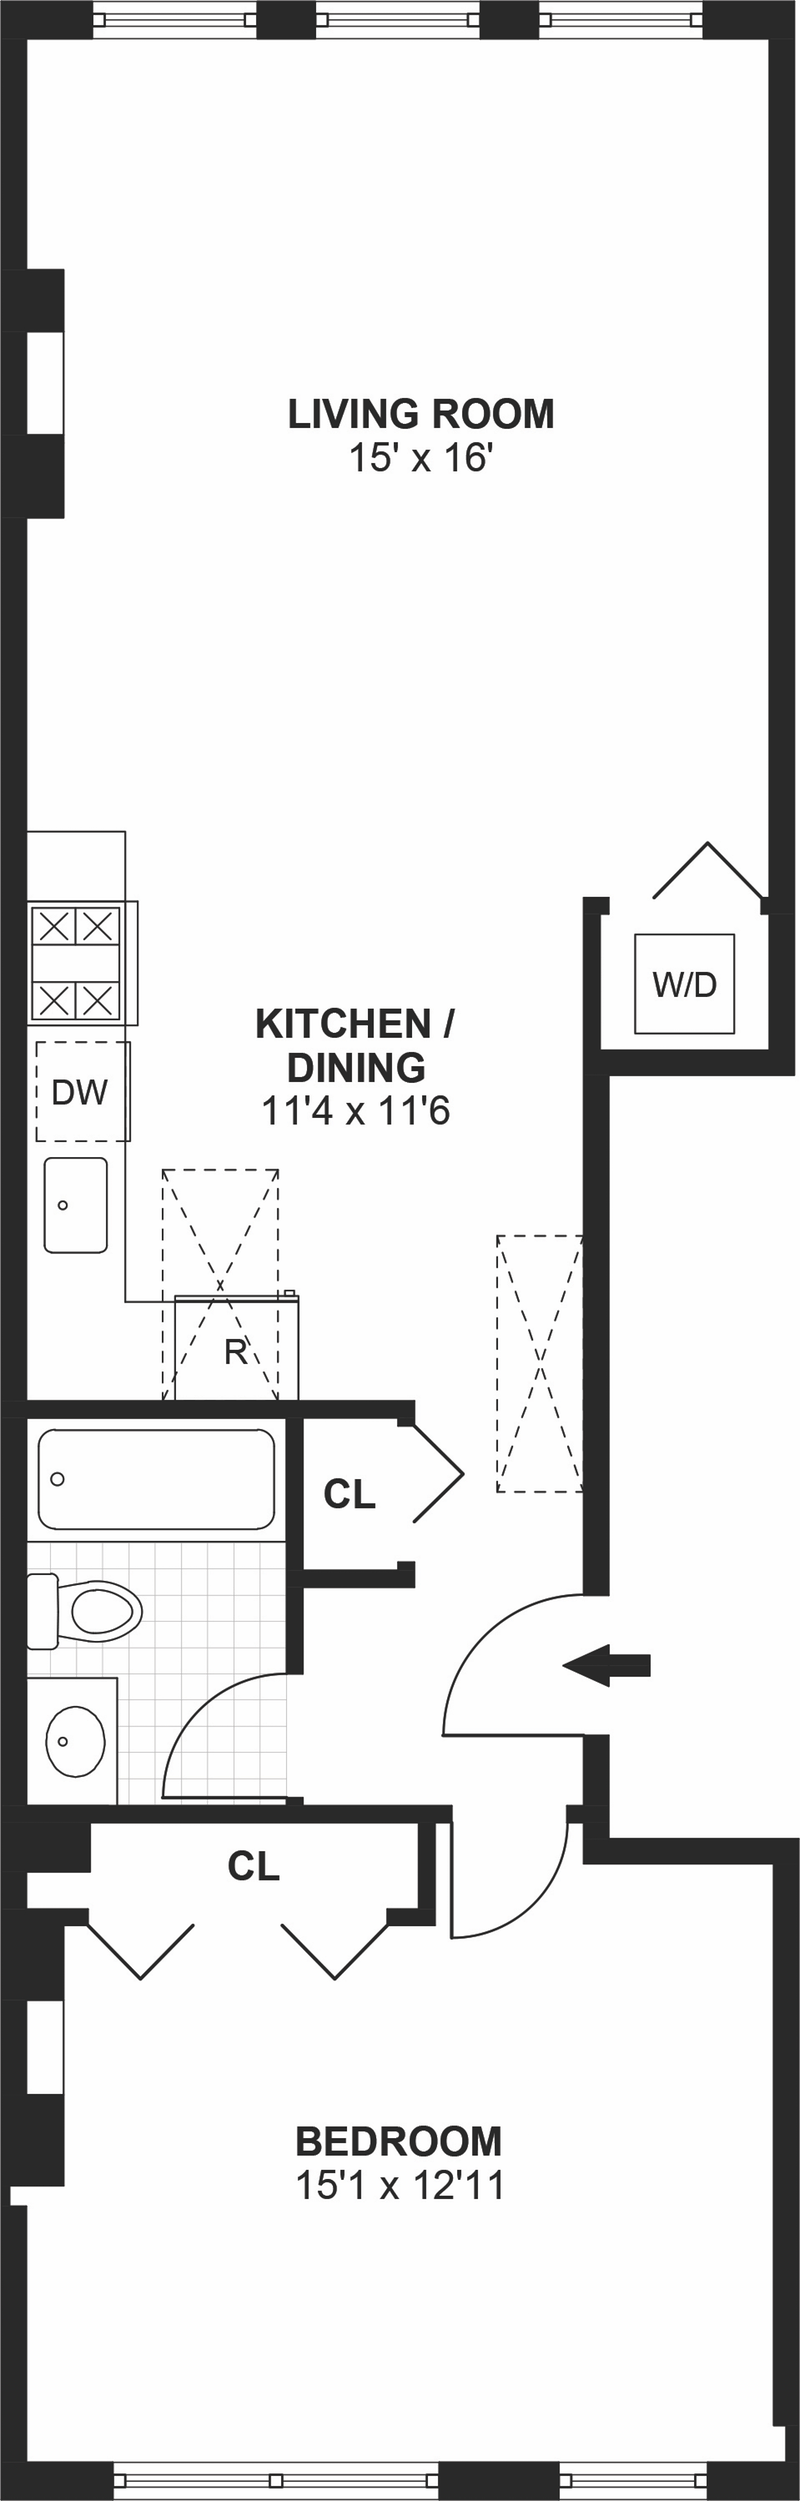 Floorplan for 533 West 149th Street, 4